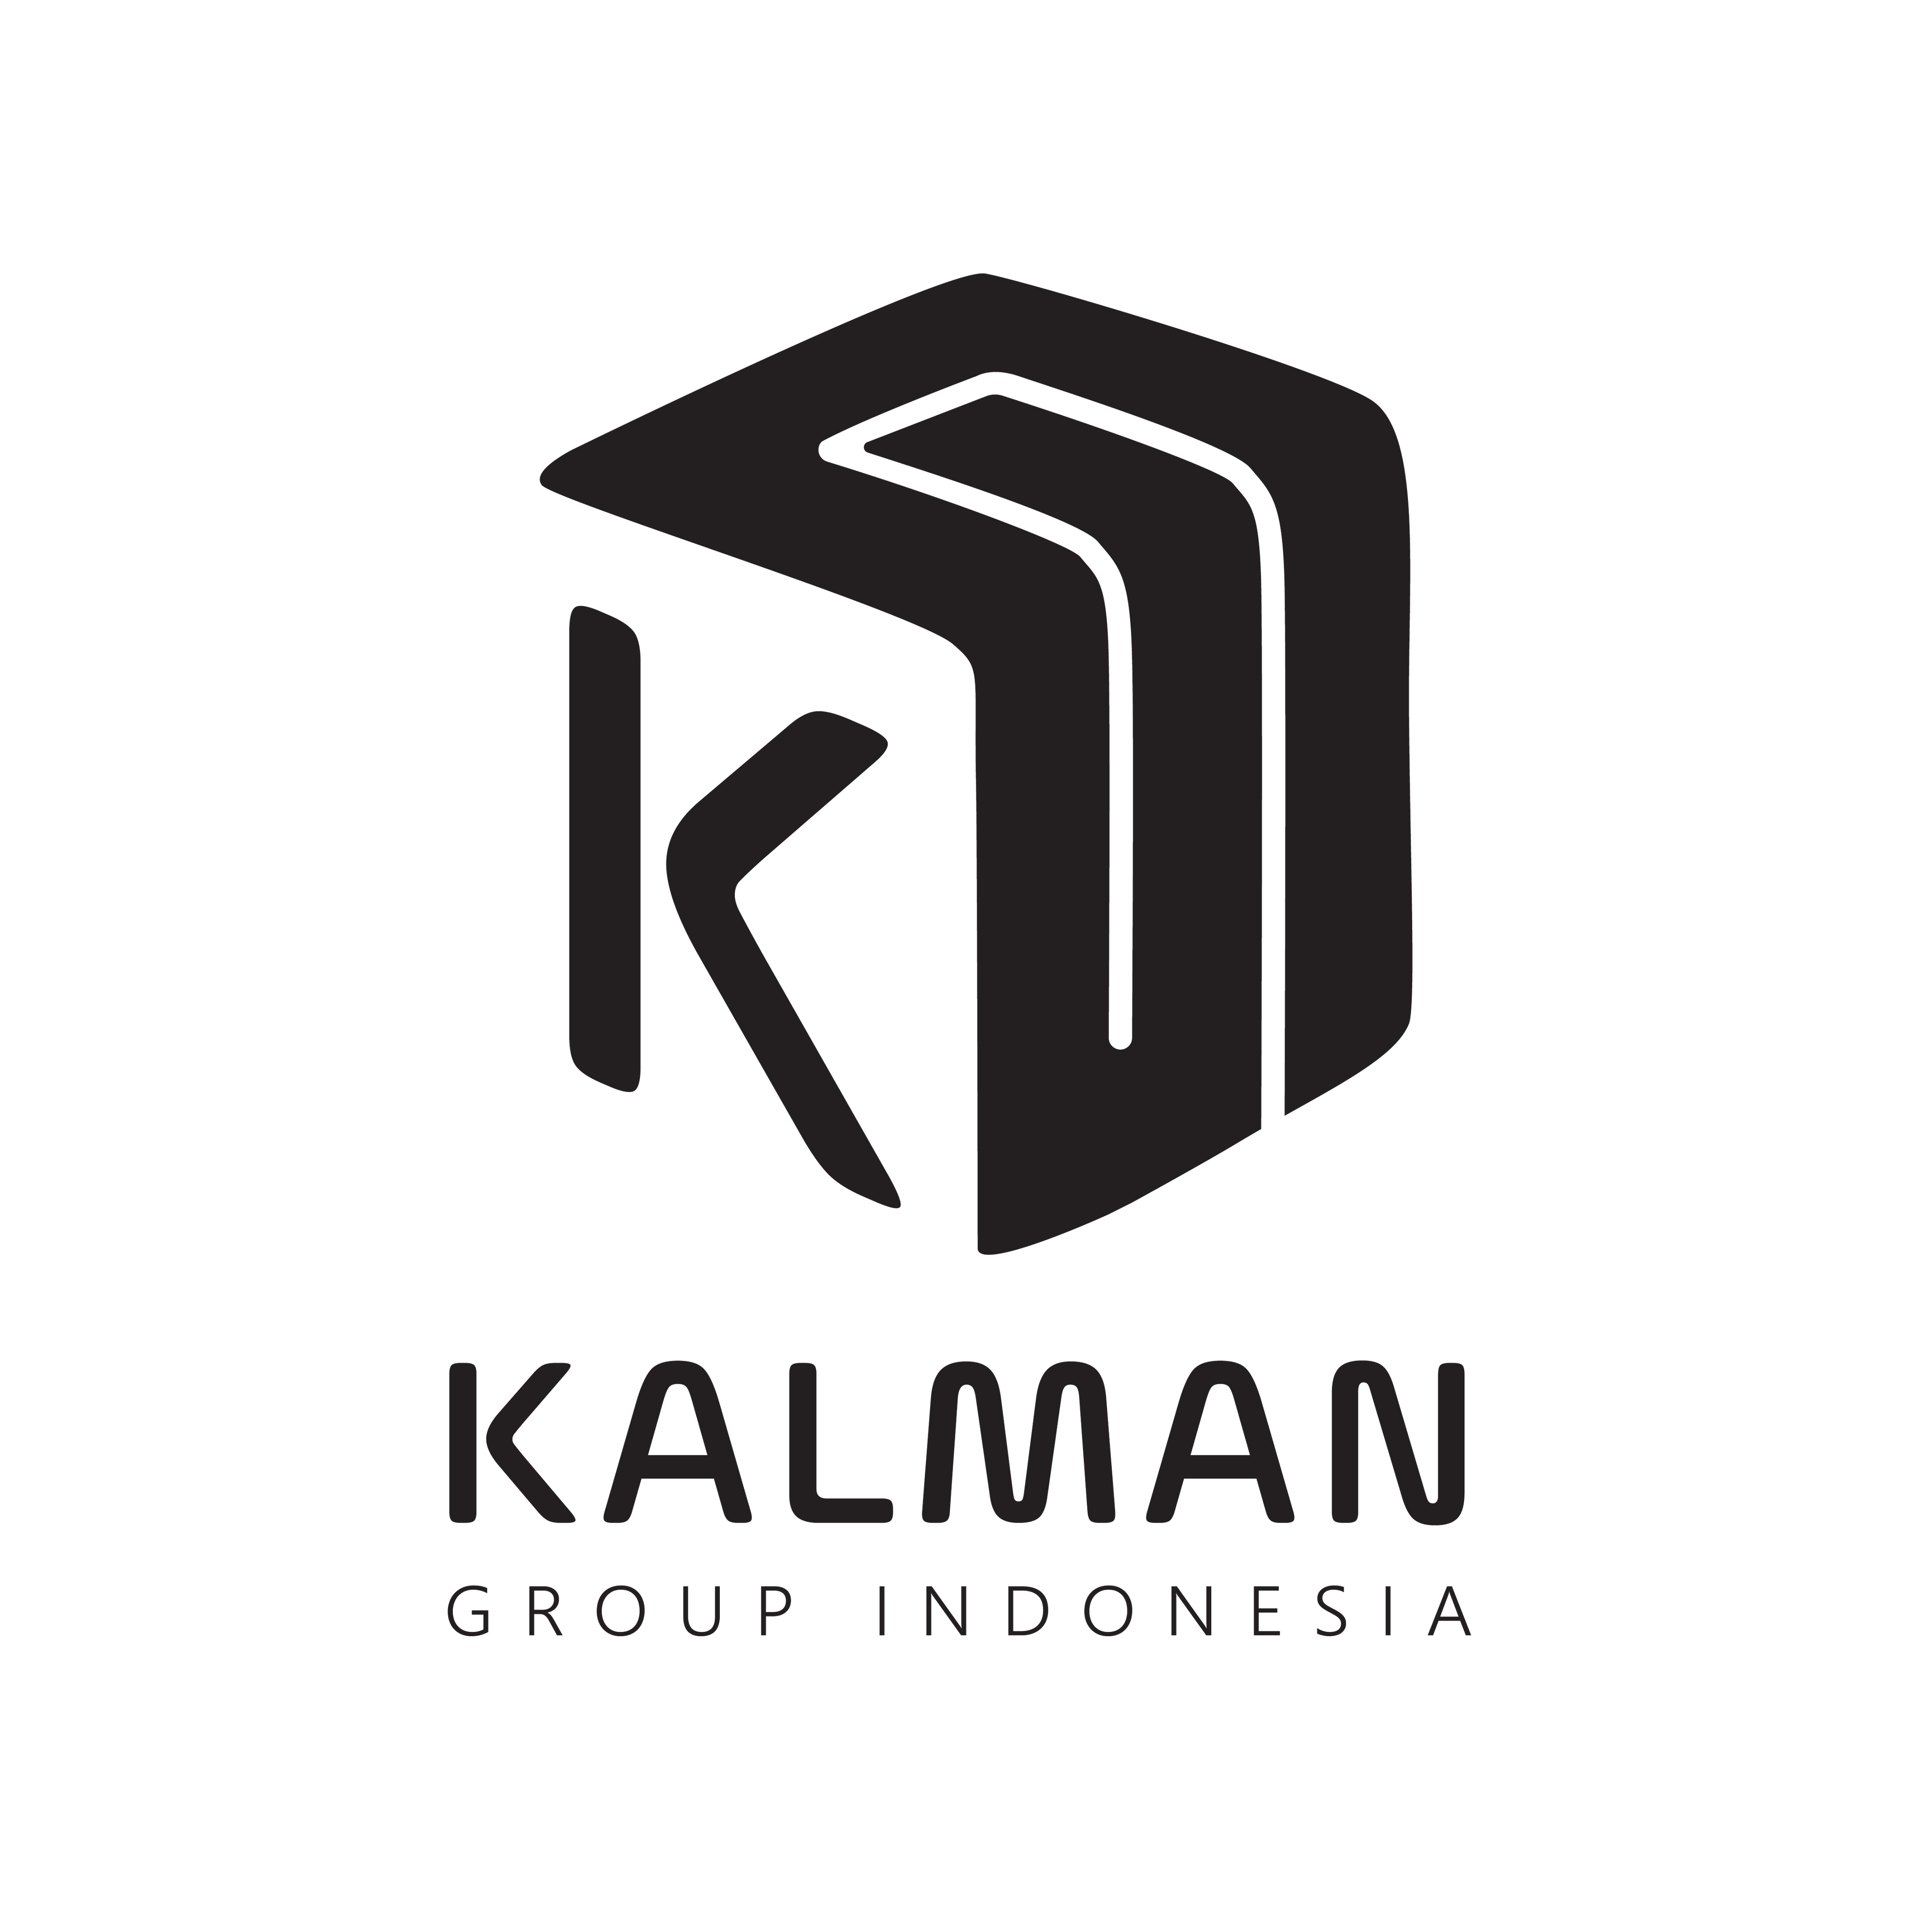 Kalman Marketing Agency